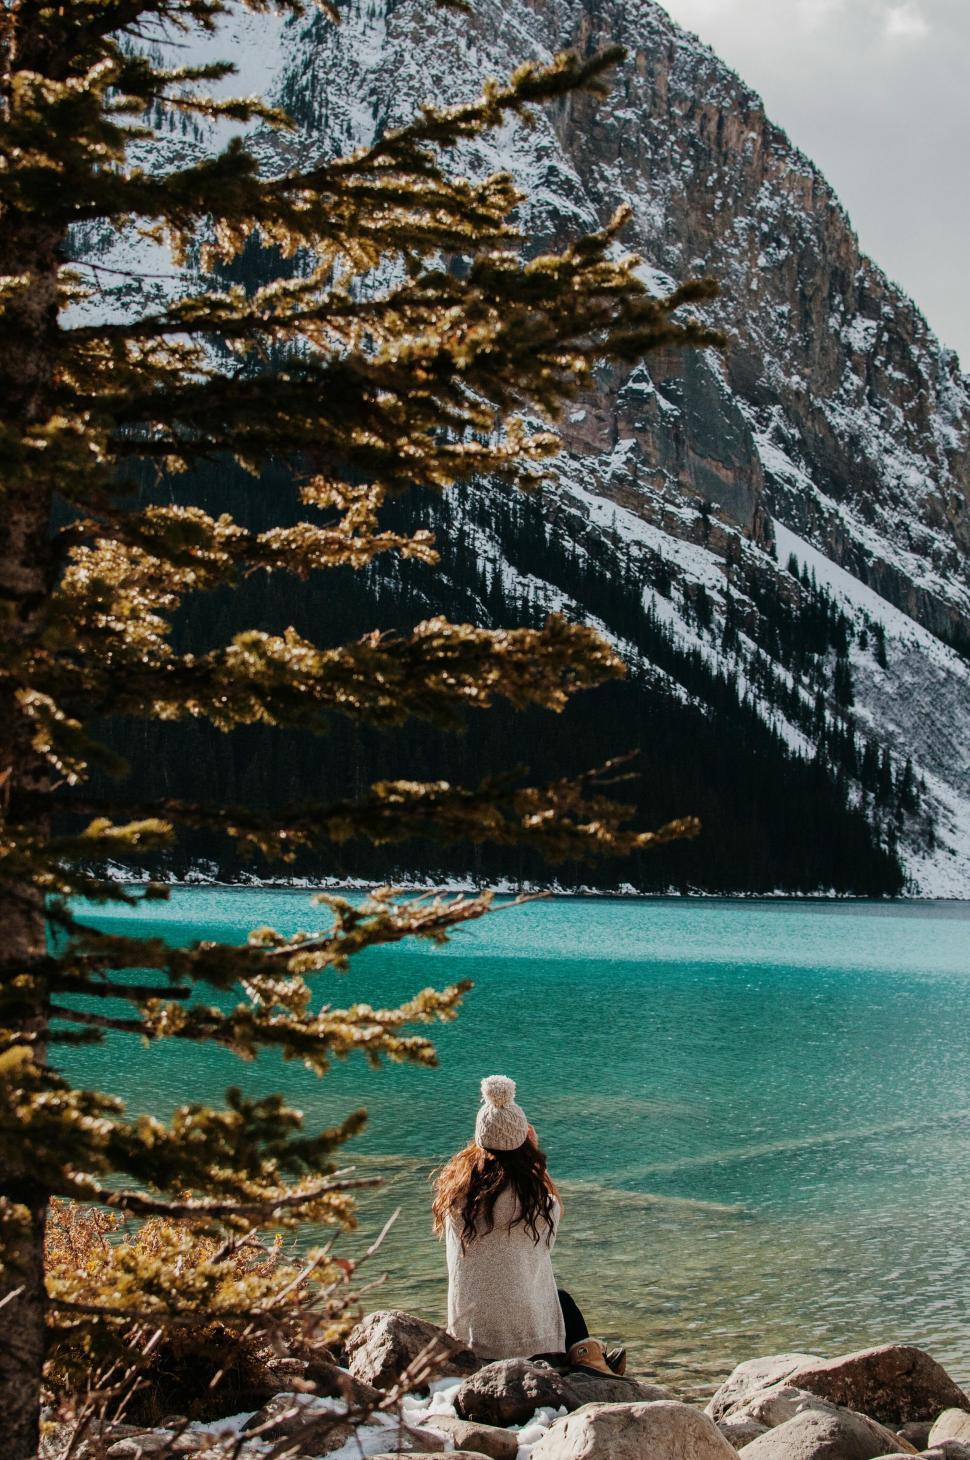 Free Image of Person Sitting on Rock Near Lake 